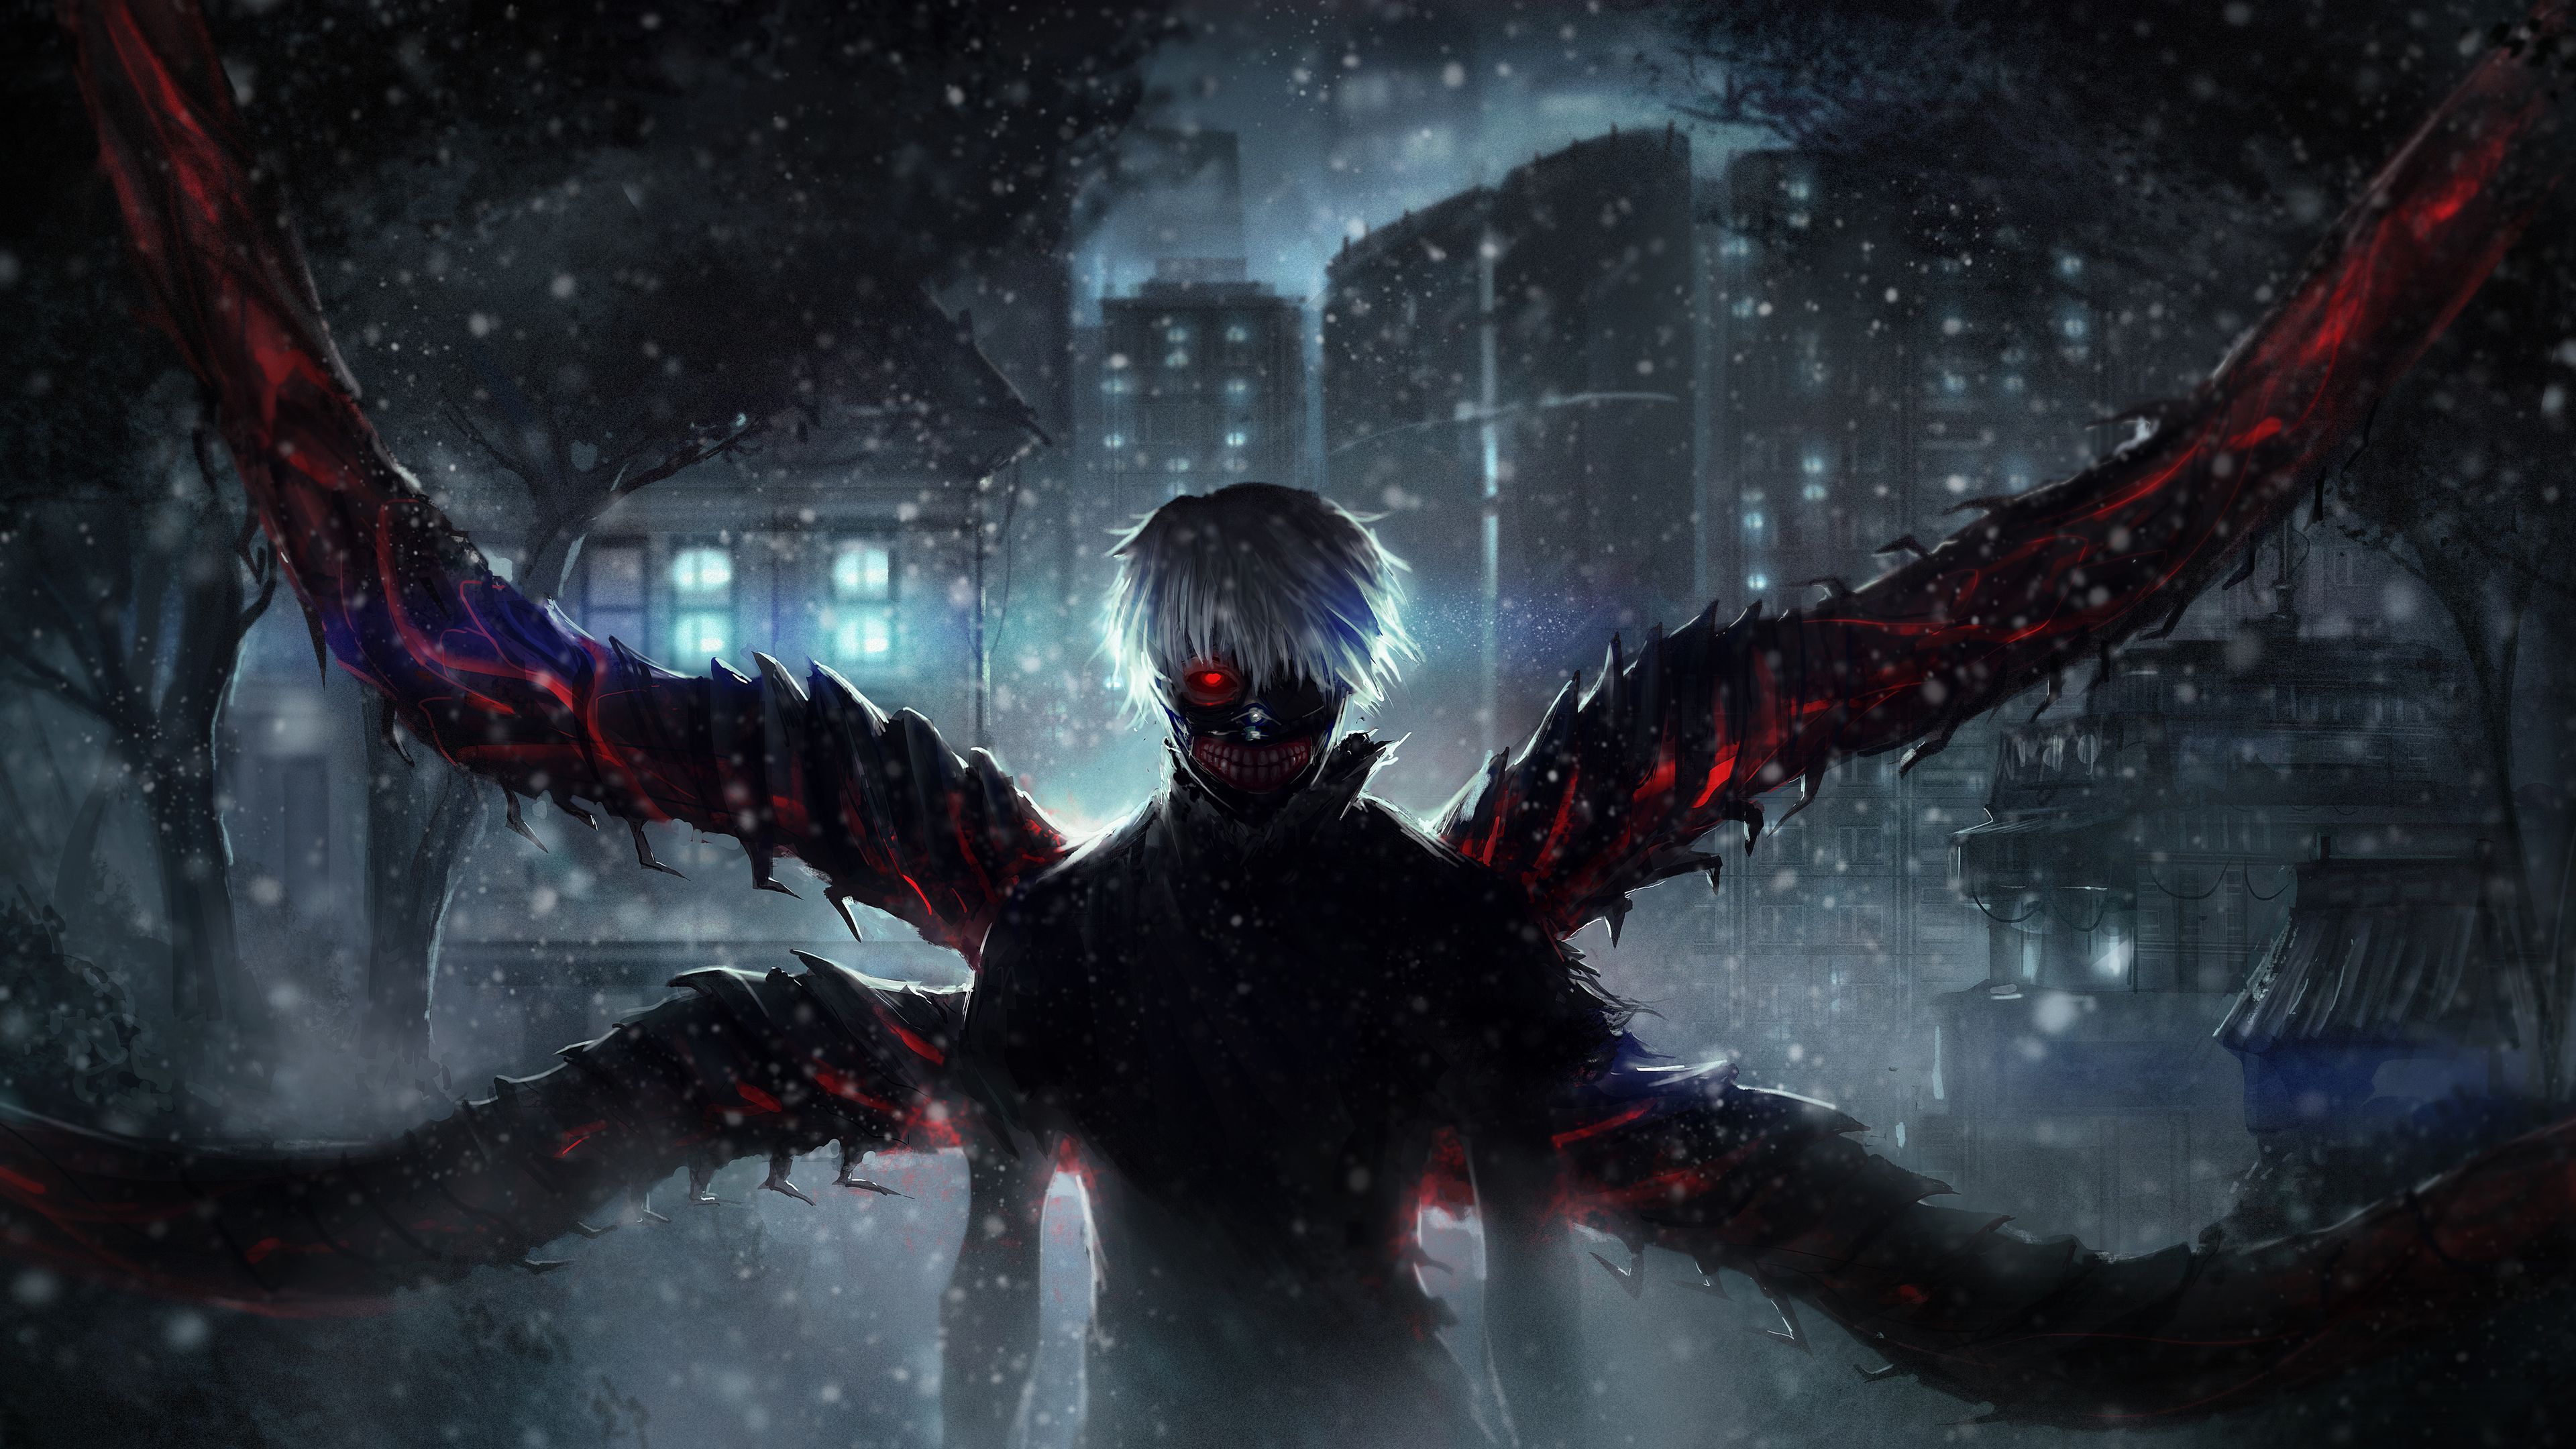 Dark anime wallpapers k free download